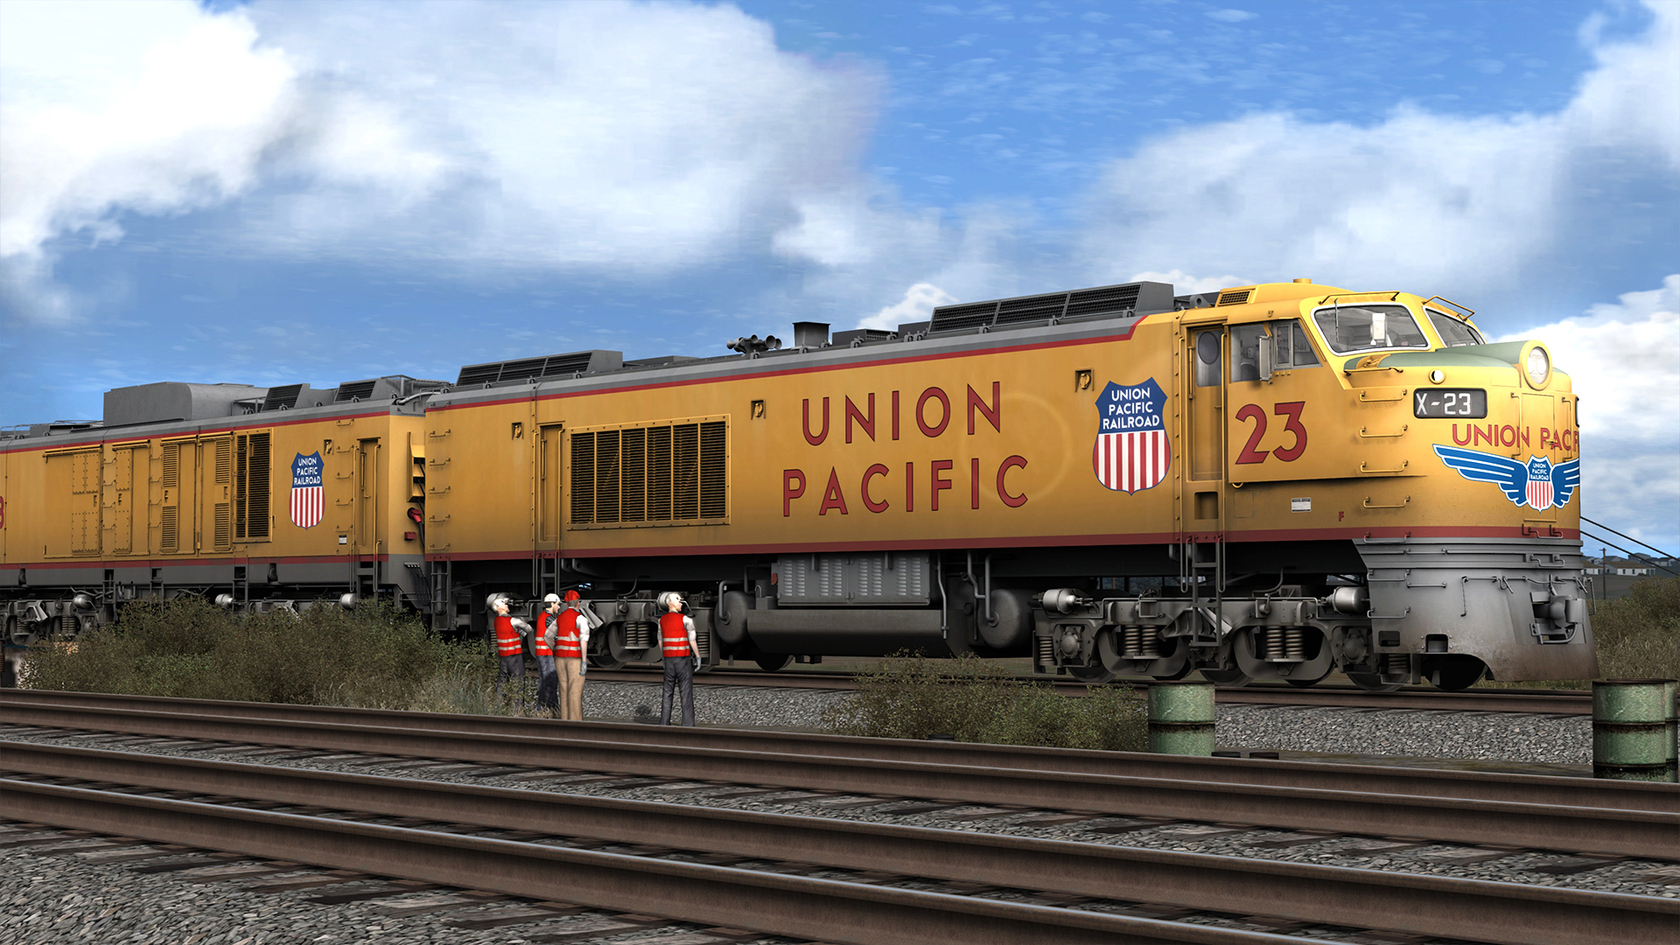 American Powerhaul Train Simulator Steam CD Key